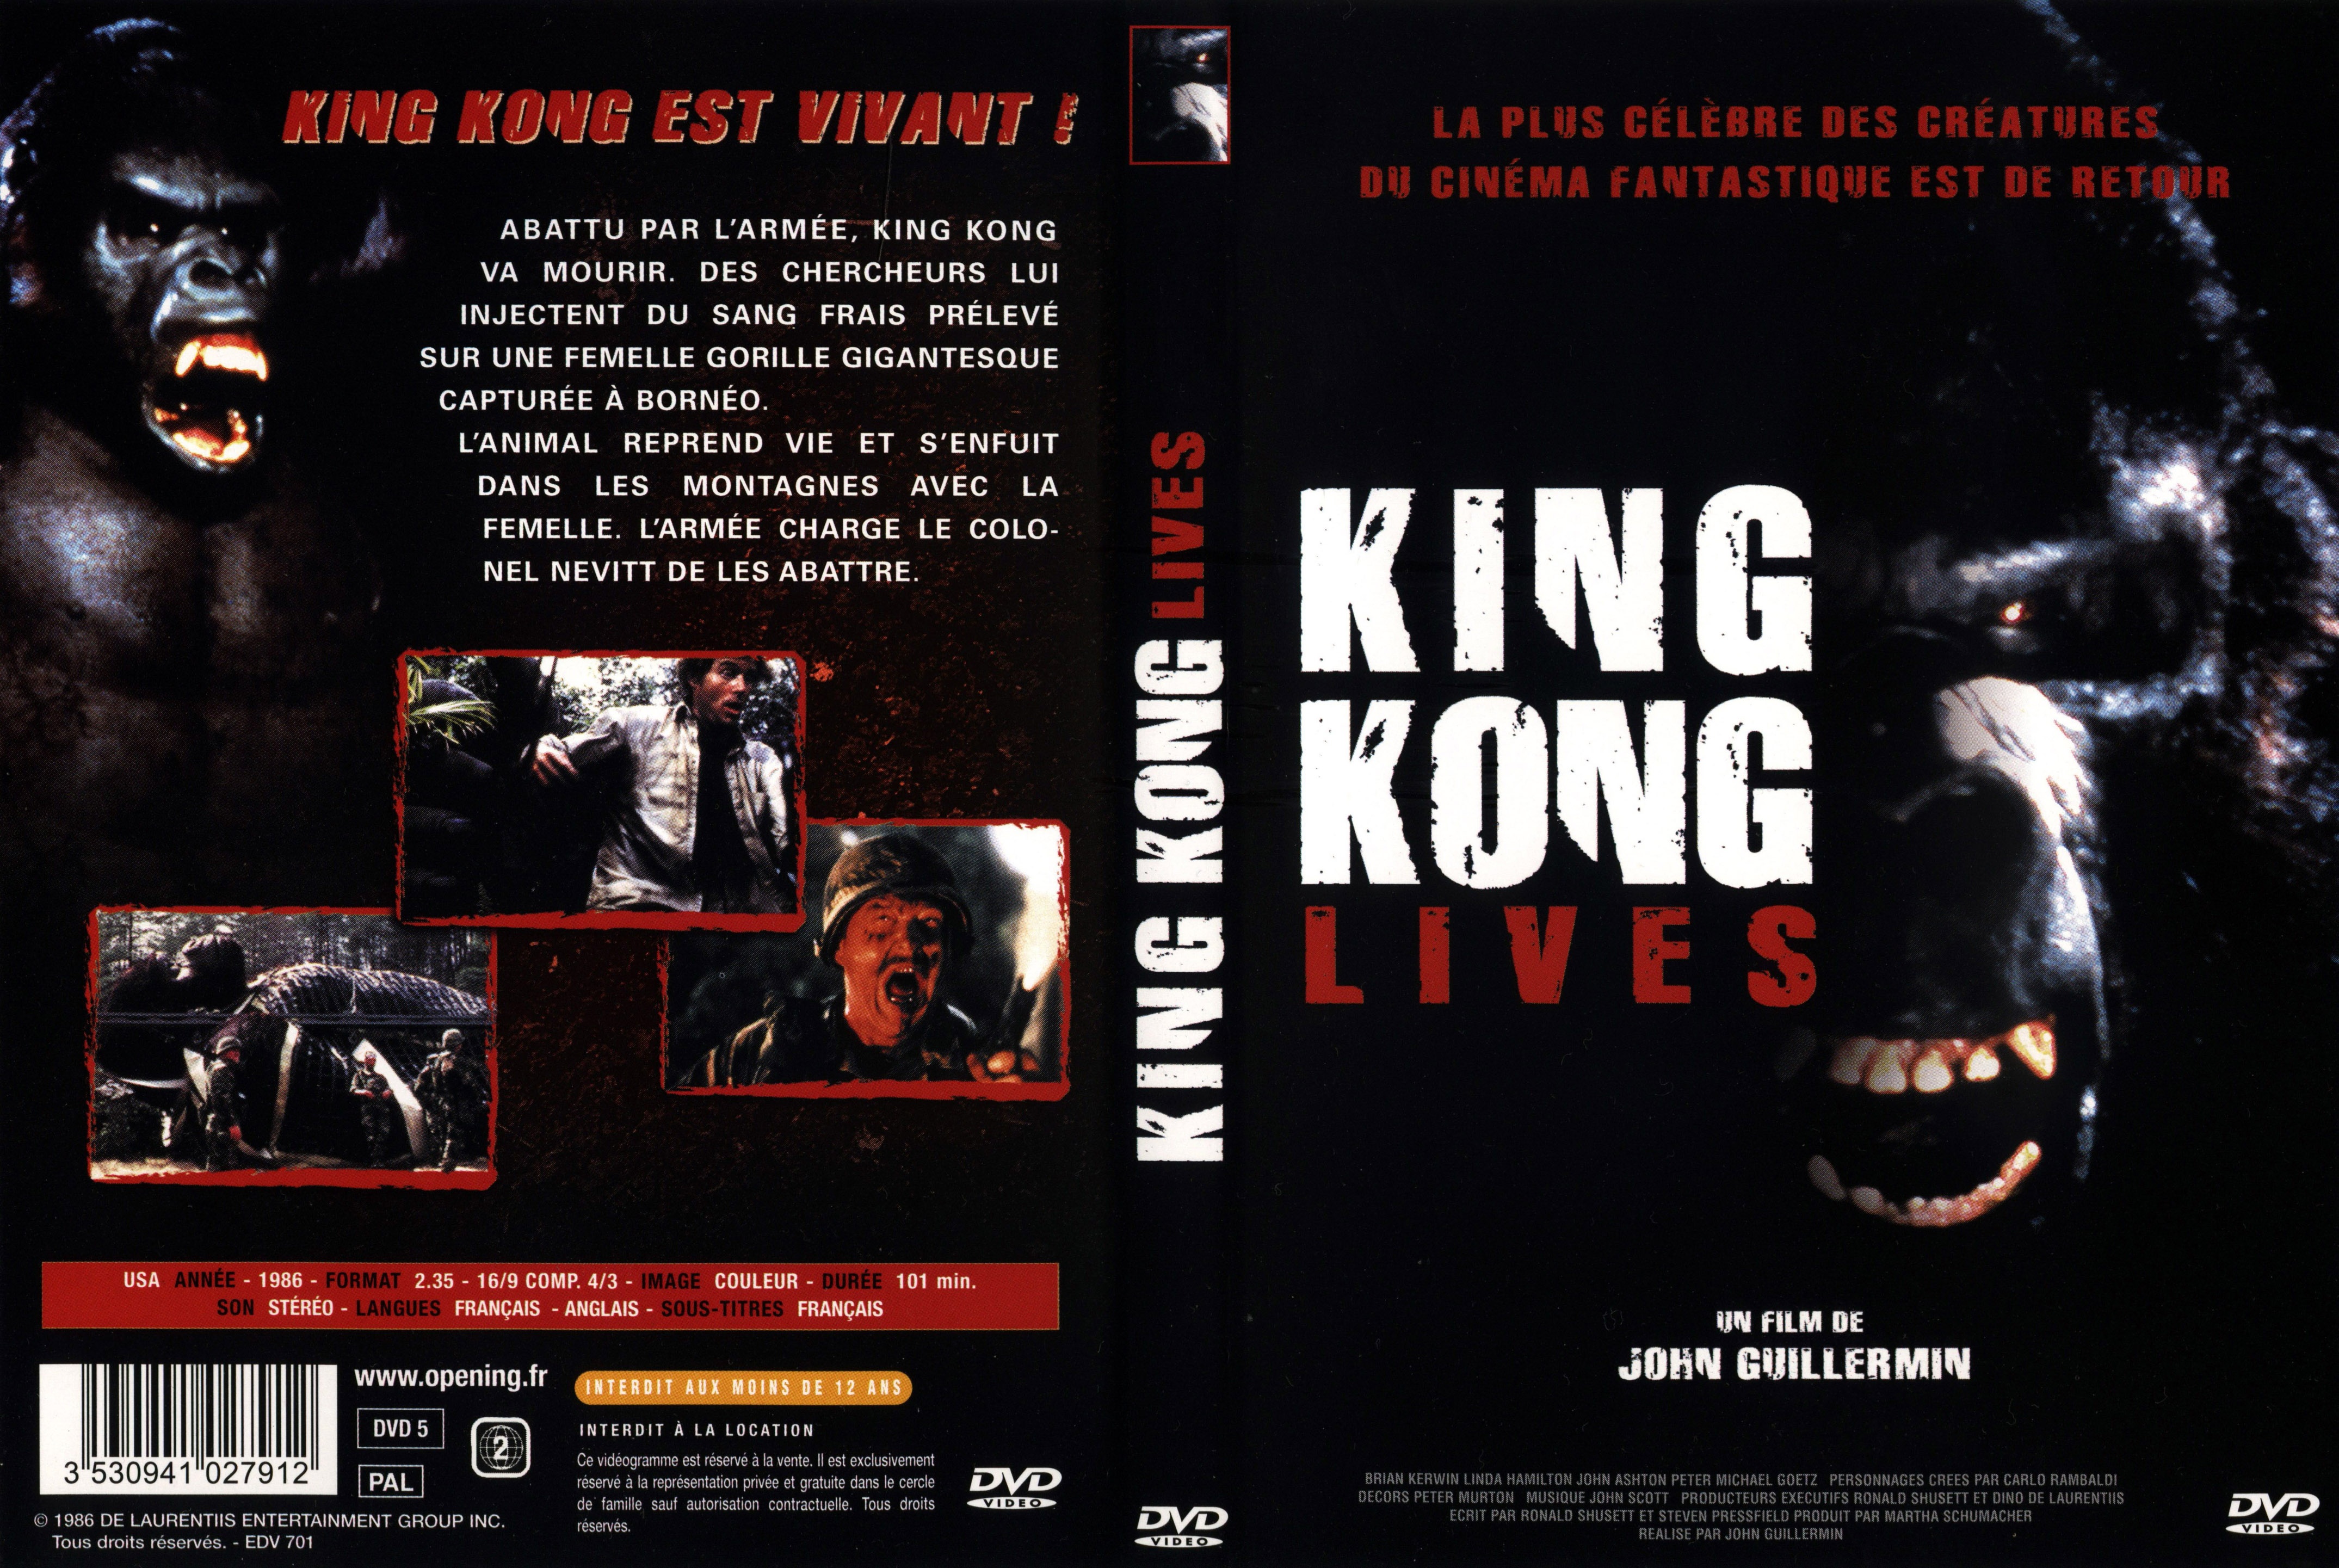 Jaquette DVD King kong lives